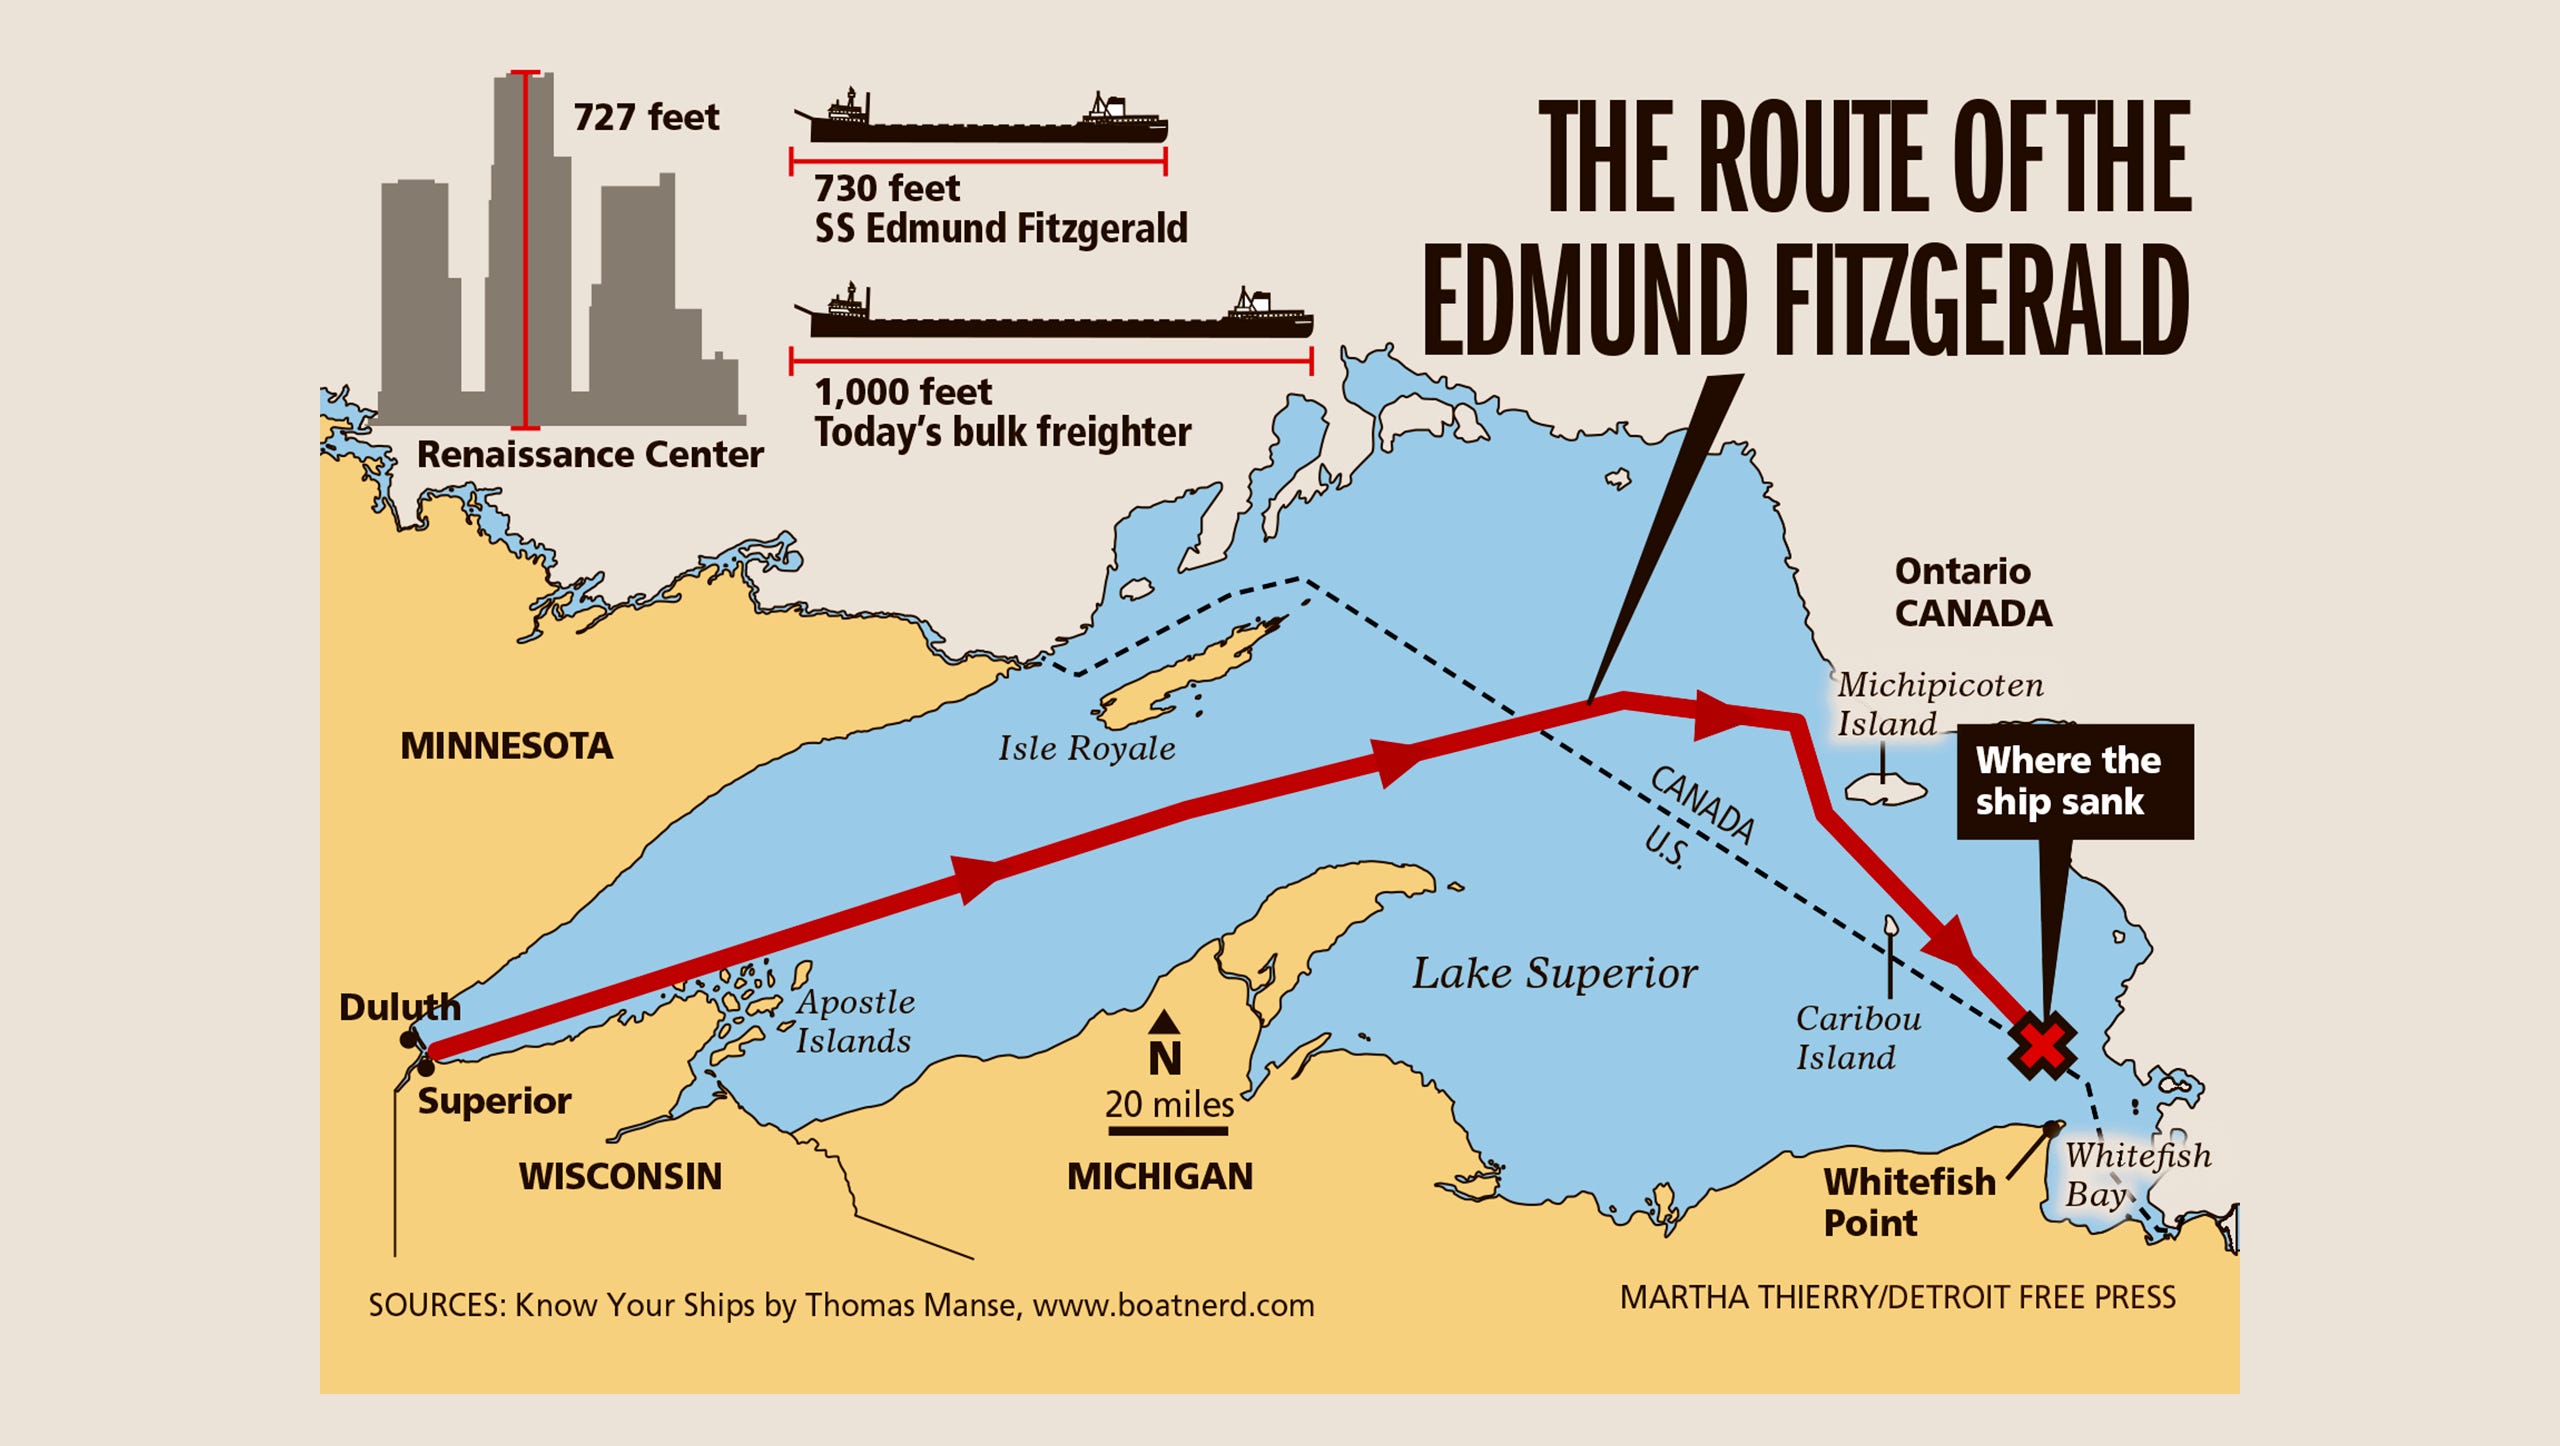 41 years ago: Edmund Fitzgerald sank in Lake Superior